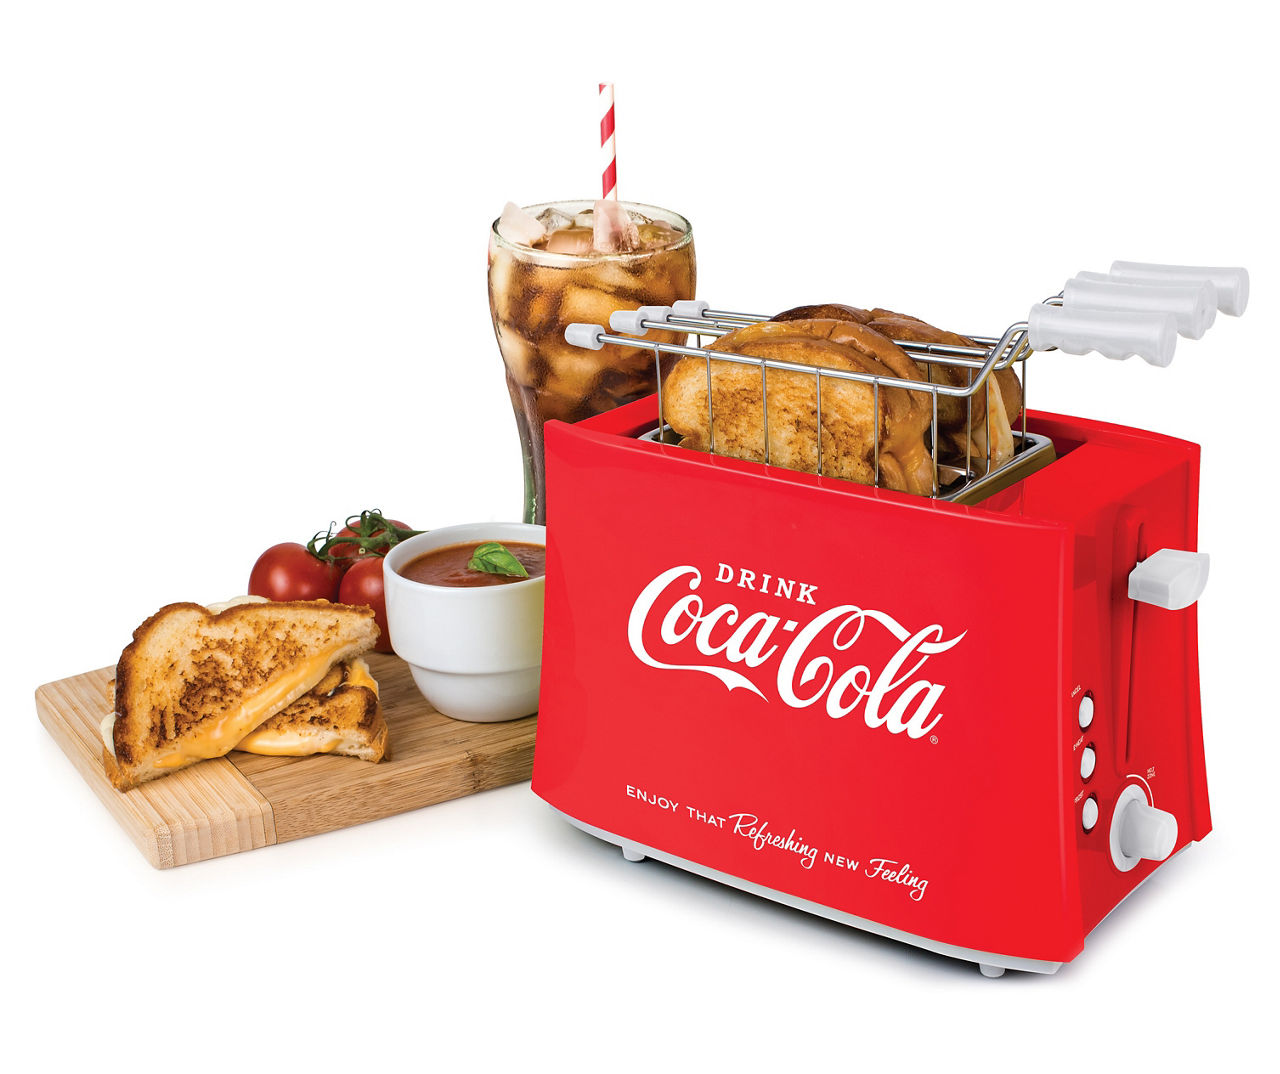 Nostalgia Coca-Cola Grilled Cheese Sandwich Toaster